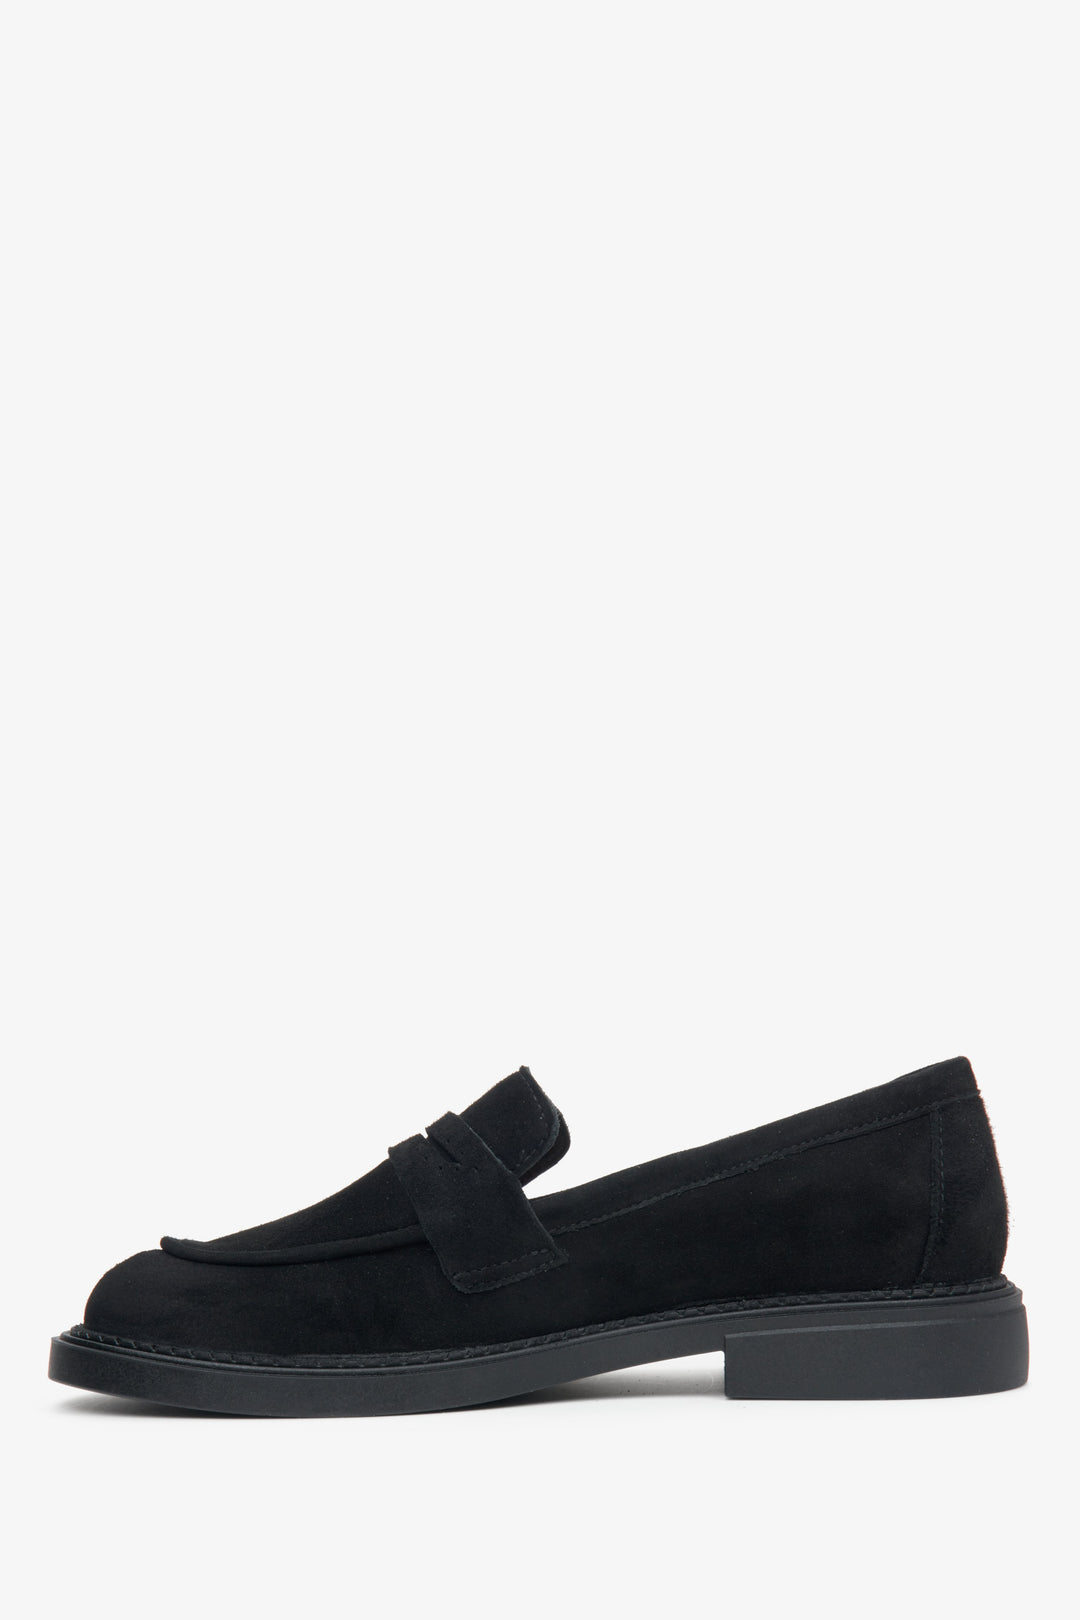 Women's black suede loafers by Estro - shoe profile.